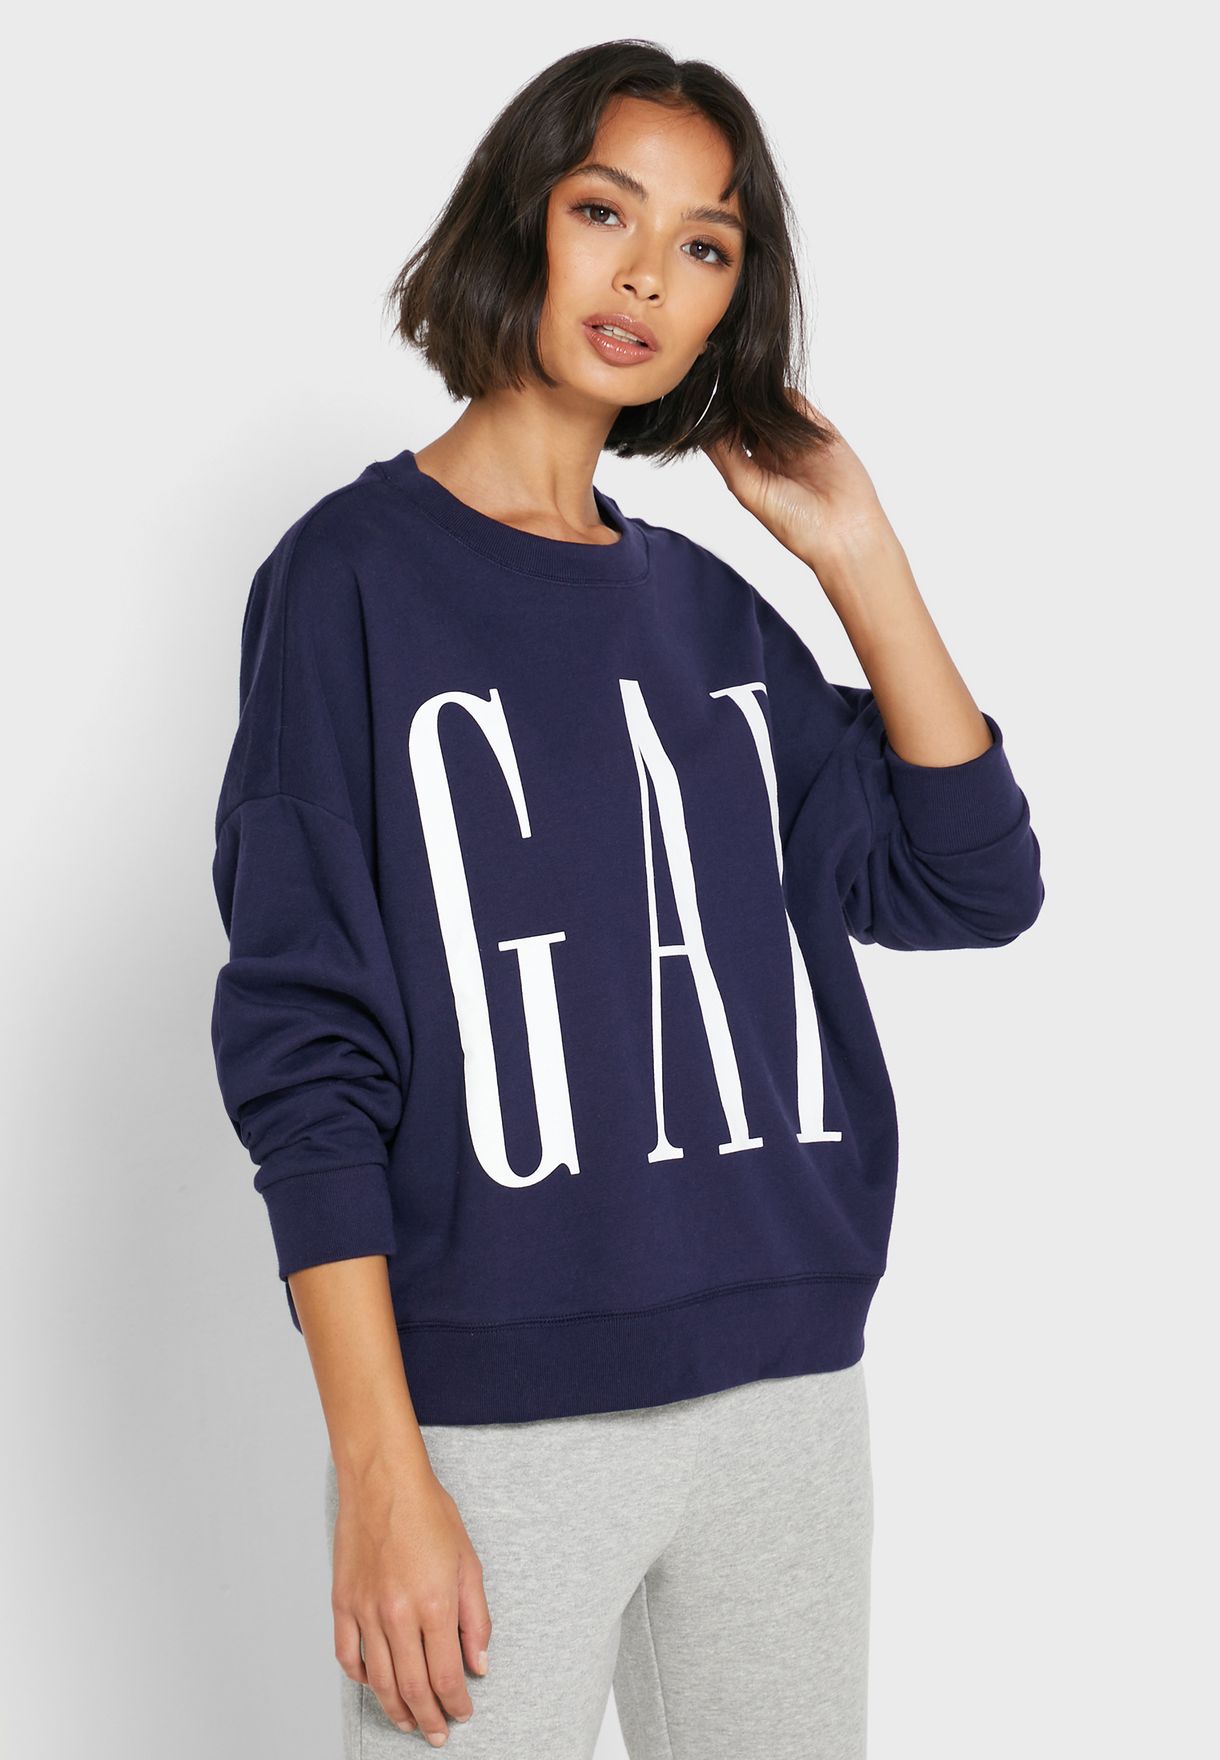 gap sweatshirts women